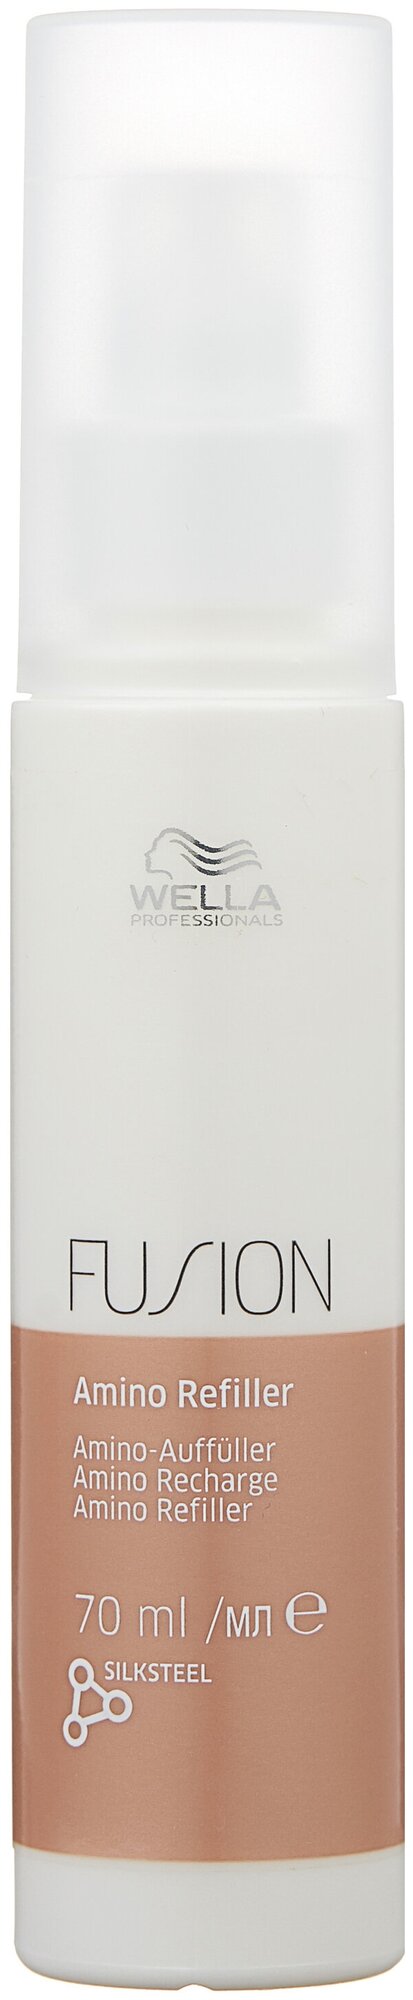 Wella Professionals / Интенсивная восстанавливающая амино-сыворотка FUSION AMINO REFILLER, 70мл